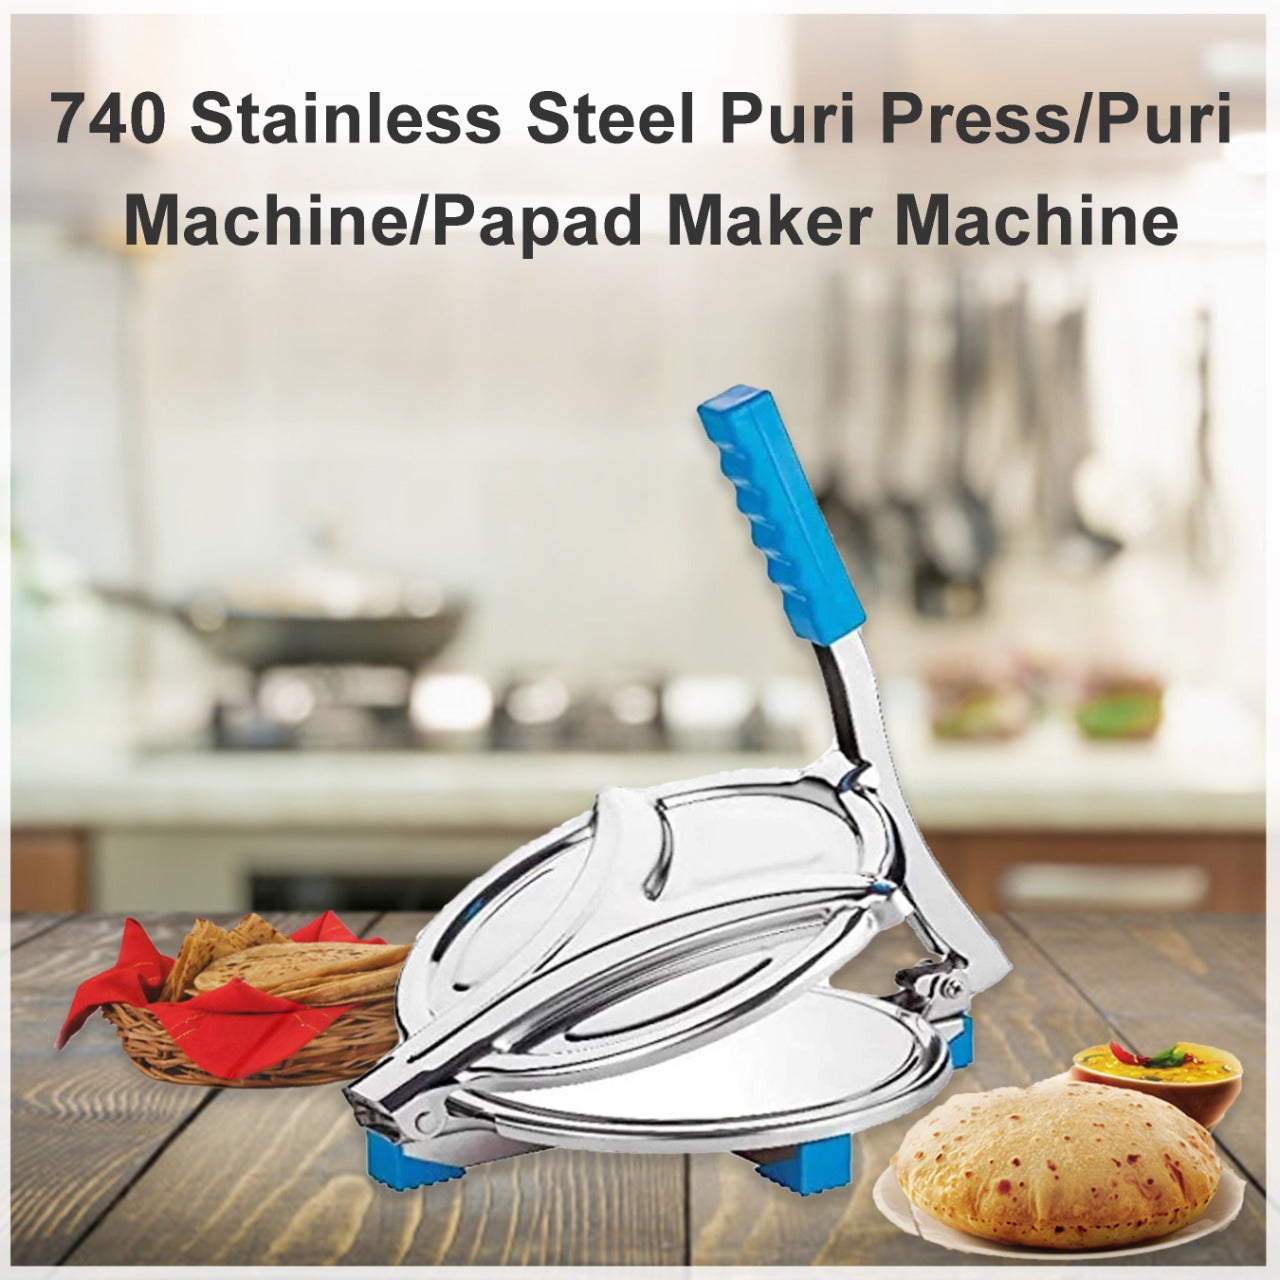 740 Stainless Steel Puri Press/Puri Machine/Papad Maker Machine DeoDap